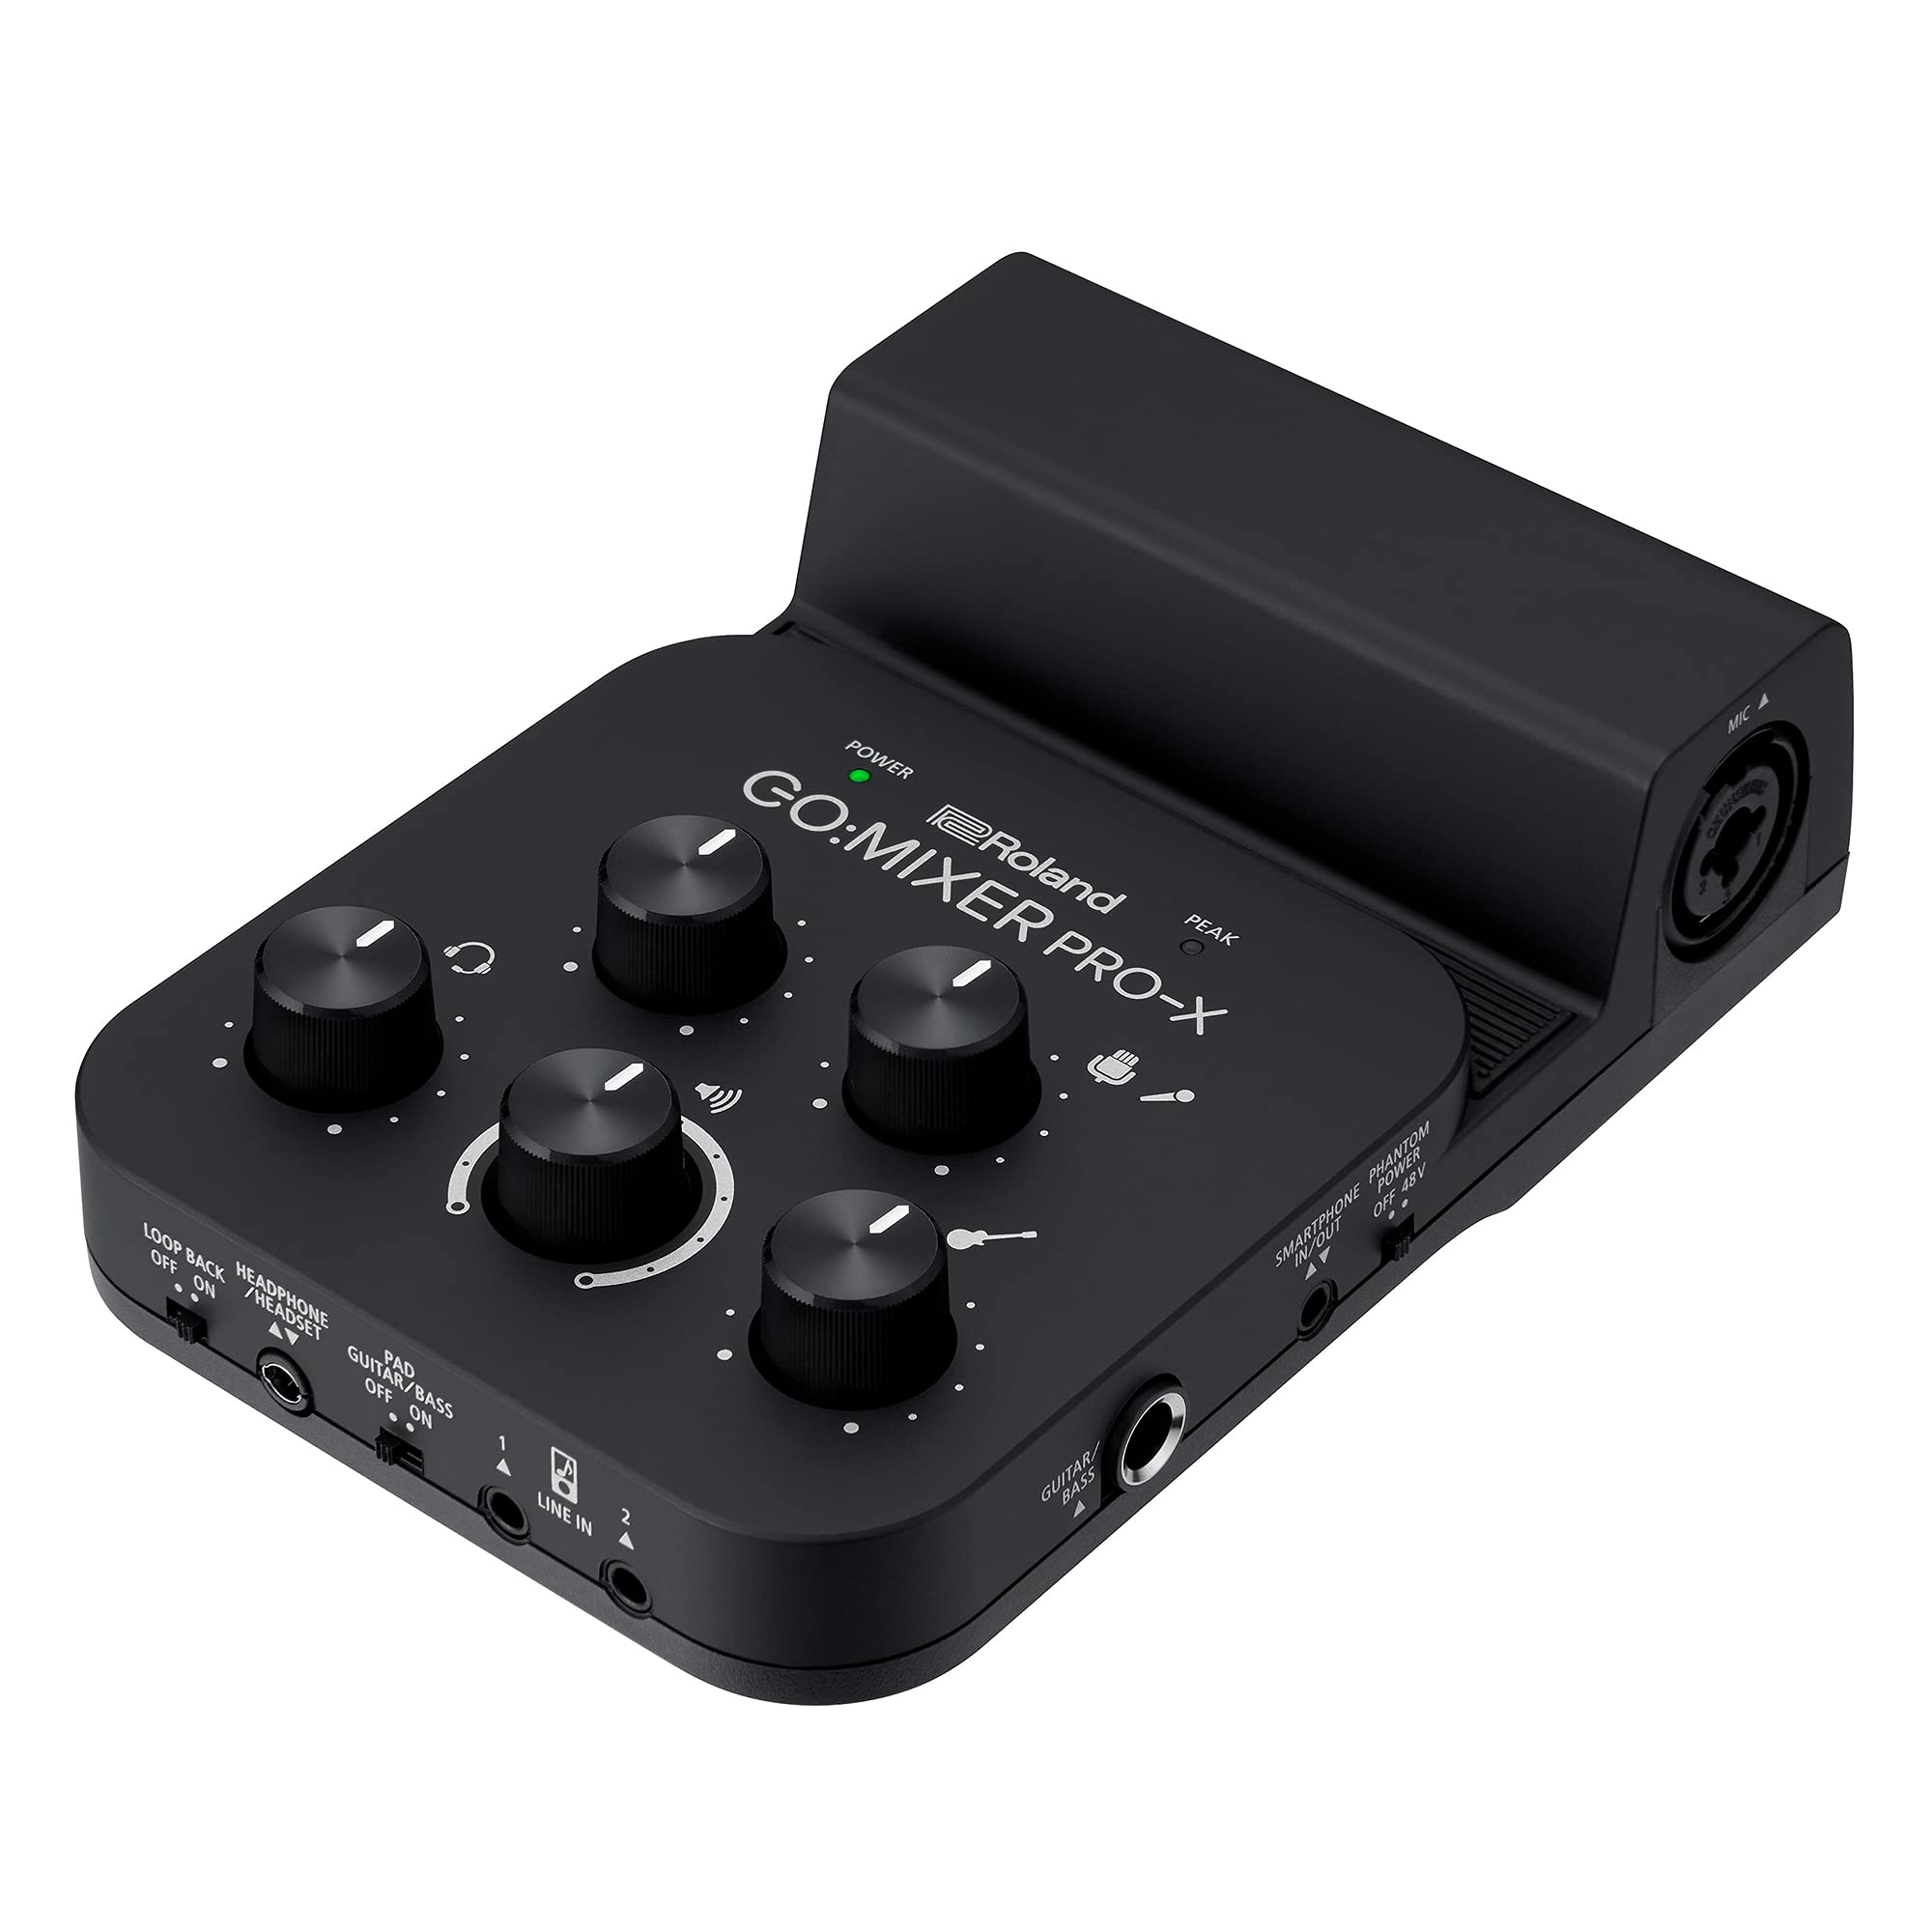  Roland  GO: MIXER PRO-X Audio Mixer for Smartphones | قم بتوصيل ومزج ما يصل إلى 7 مصادر صوت | أضف صوتًا بجودة الاستوديو إلى المحتوى الا...